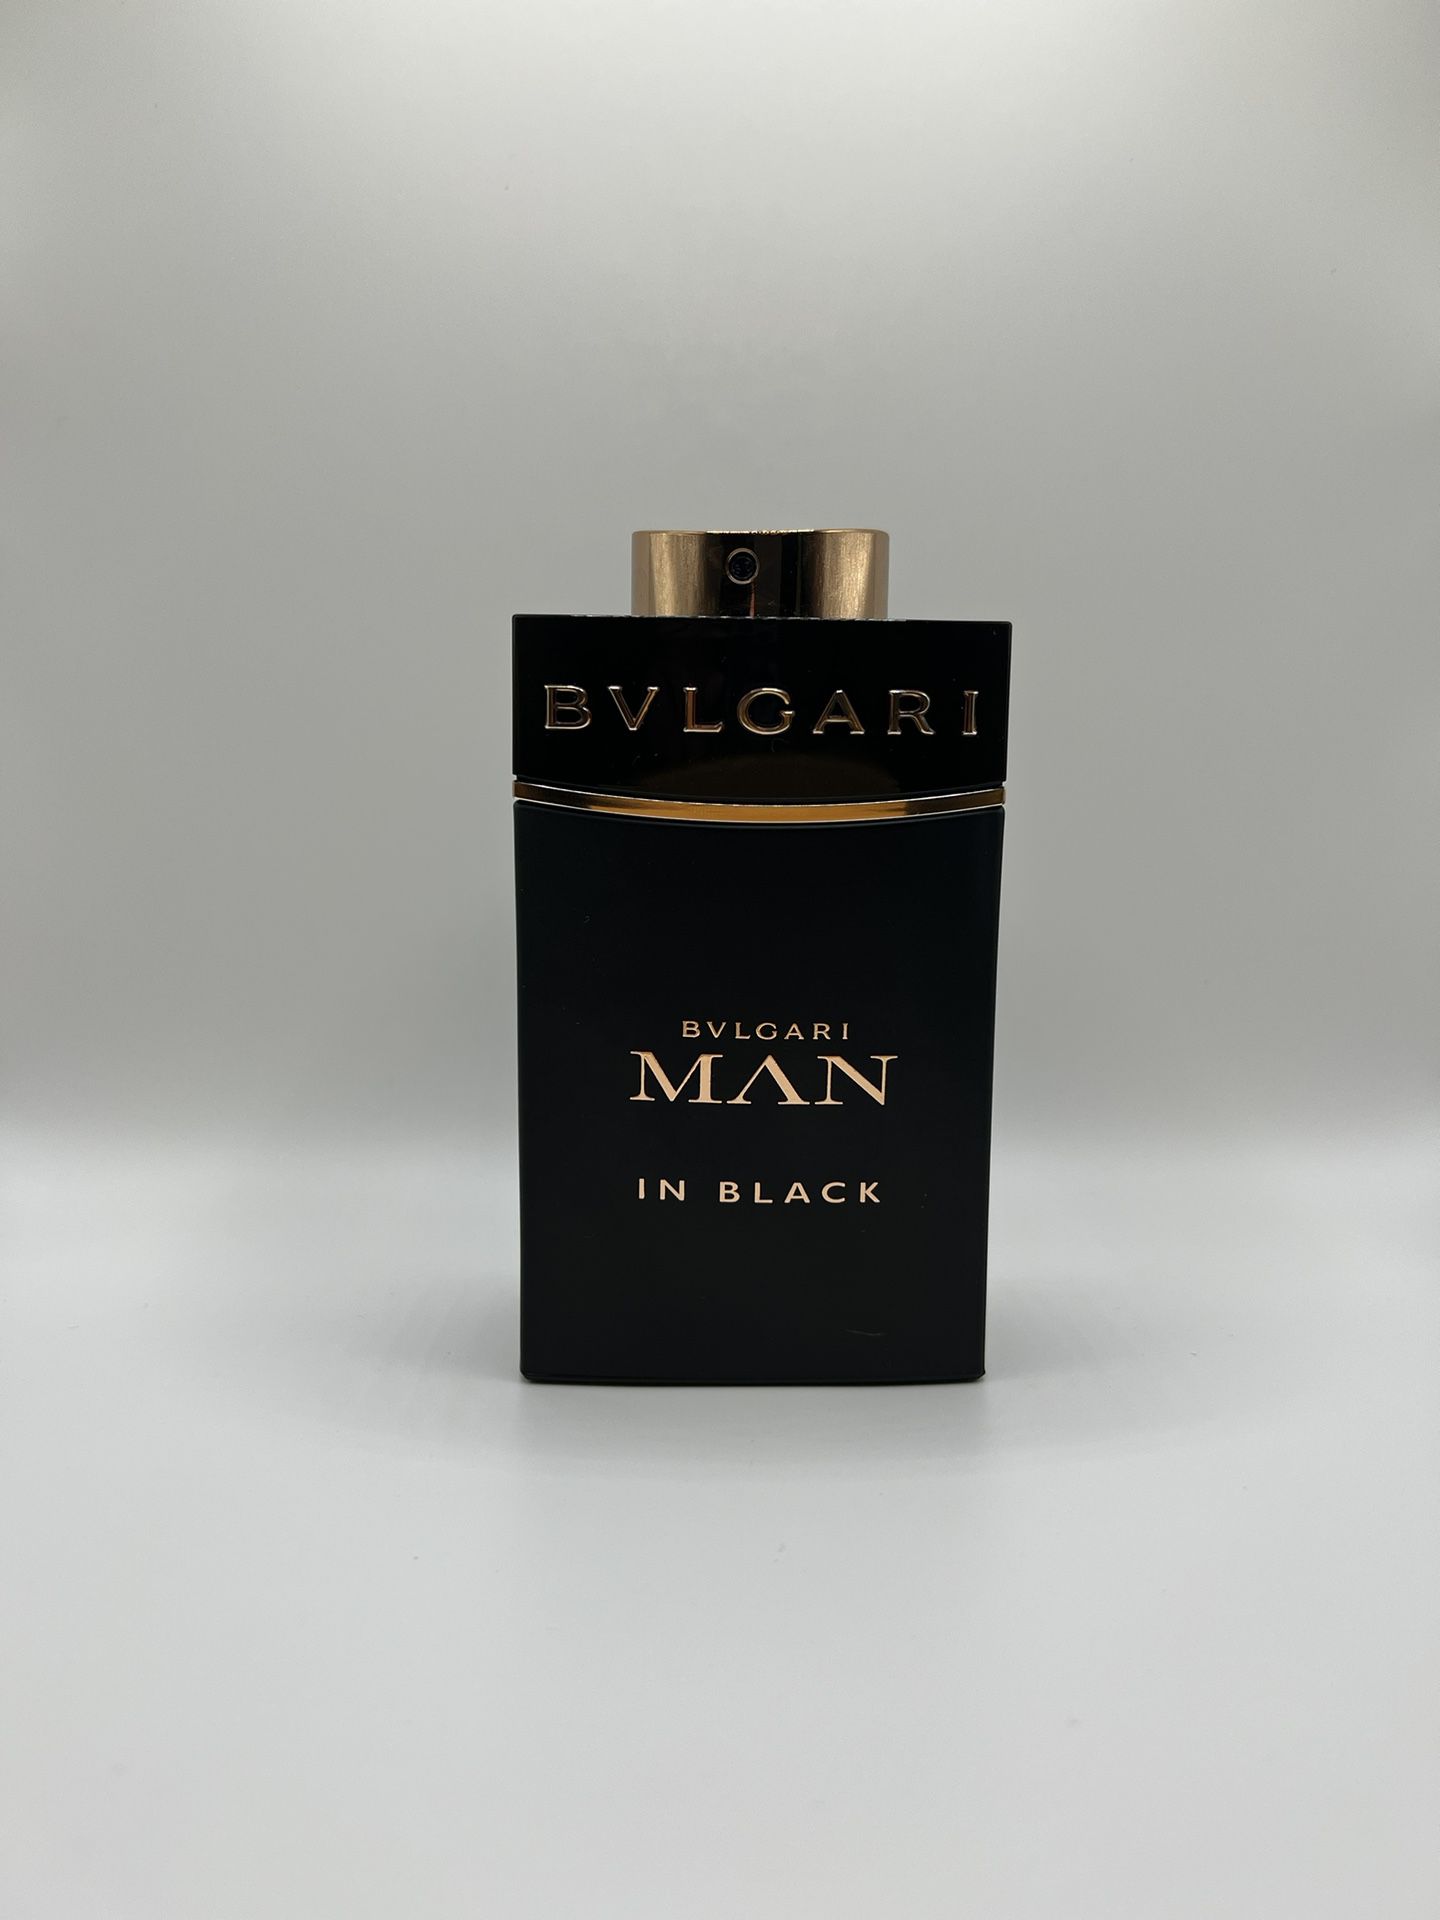 Bvlgari Man In Black EDP Fragrance Glass Decant Sample Spray Travel Size Vial 10ML